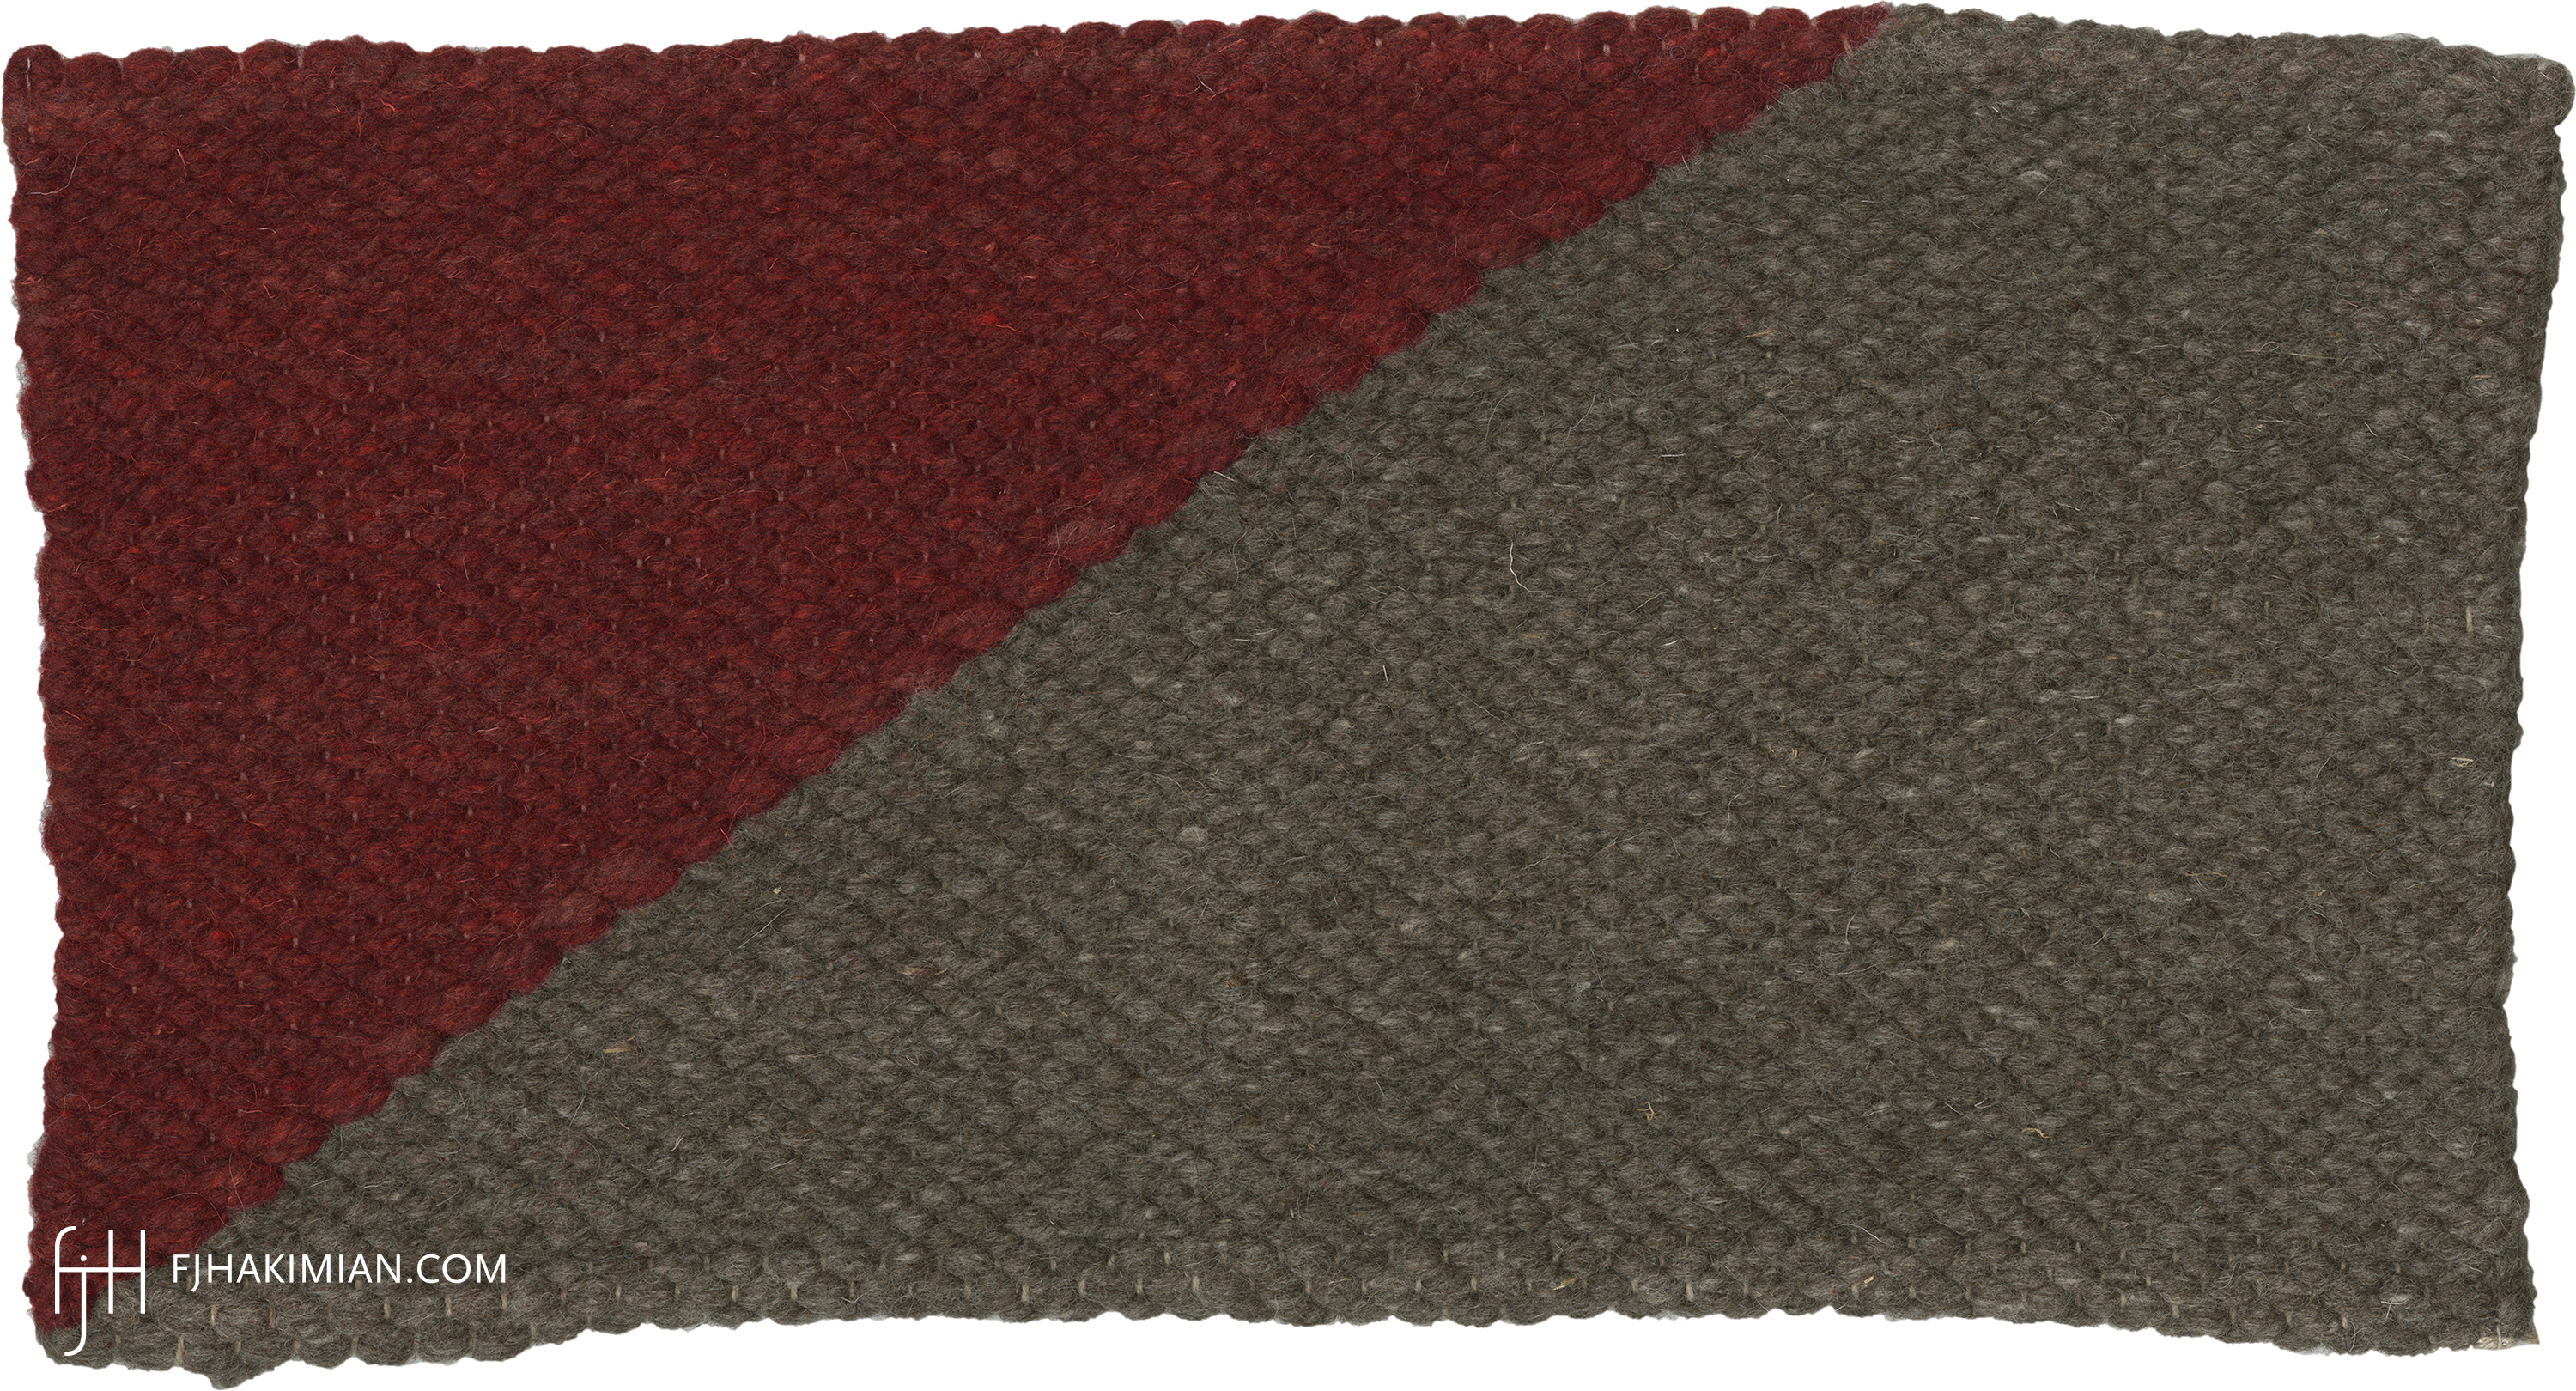 AB-HATLGLAT | Custom Spanish Carpet | FJ Hakimian | Carpet Gallery in NYC